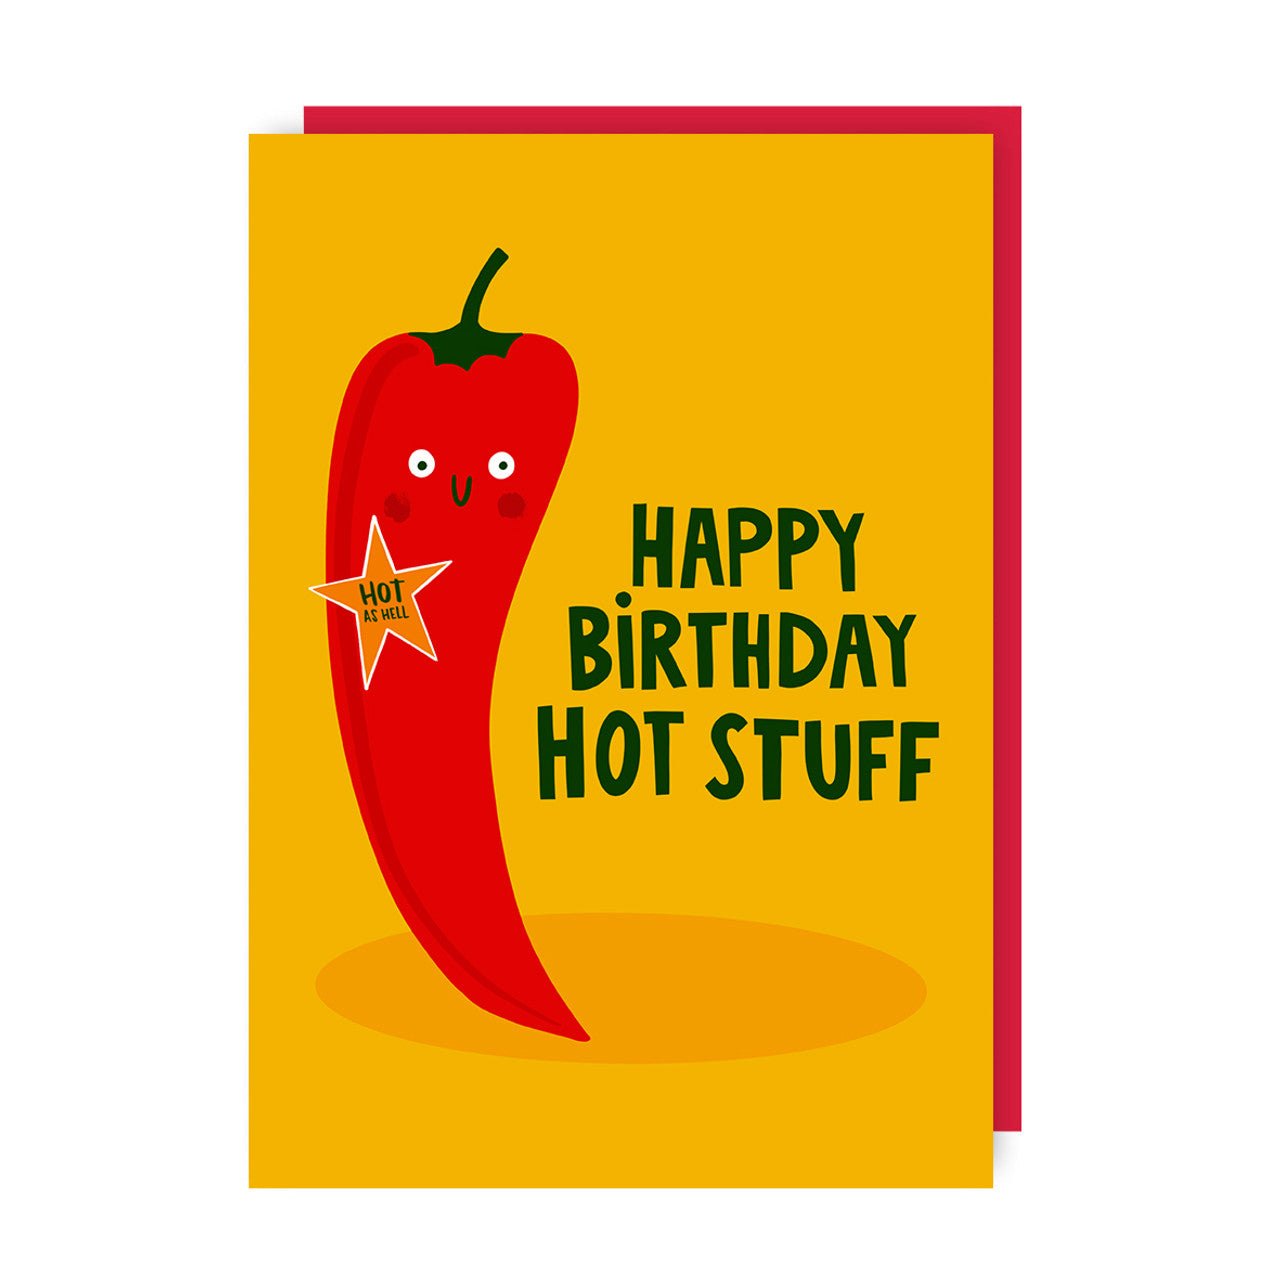 Happy Birthday Card text reads "Happy Birthday Hot Stuff"